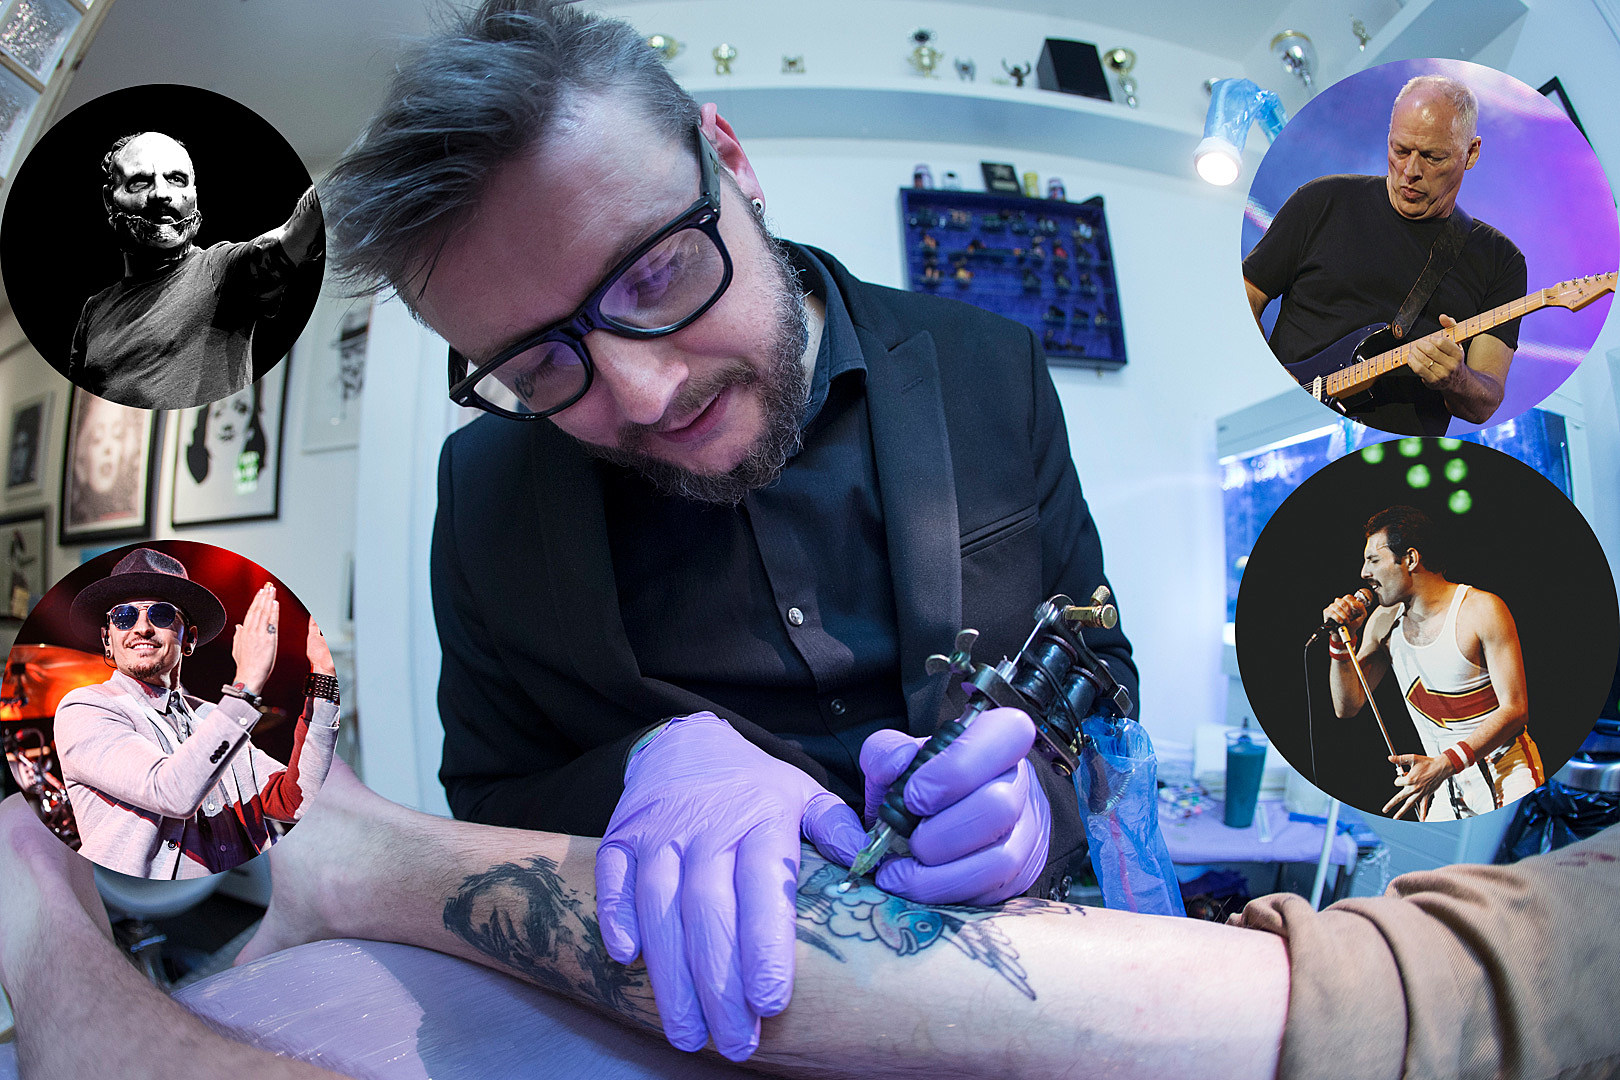 TattooCharm  Linkin Park for his first tattoo  Facebook